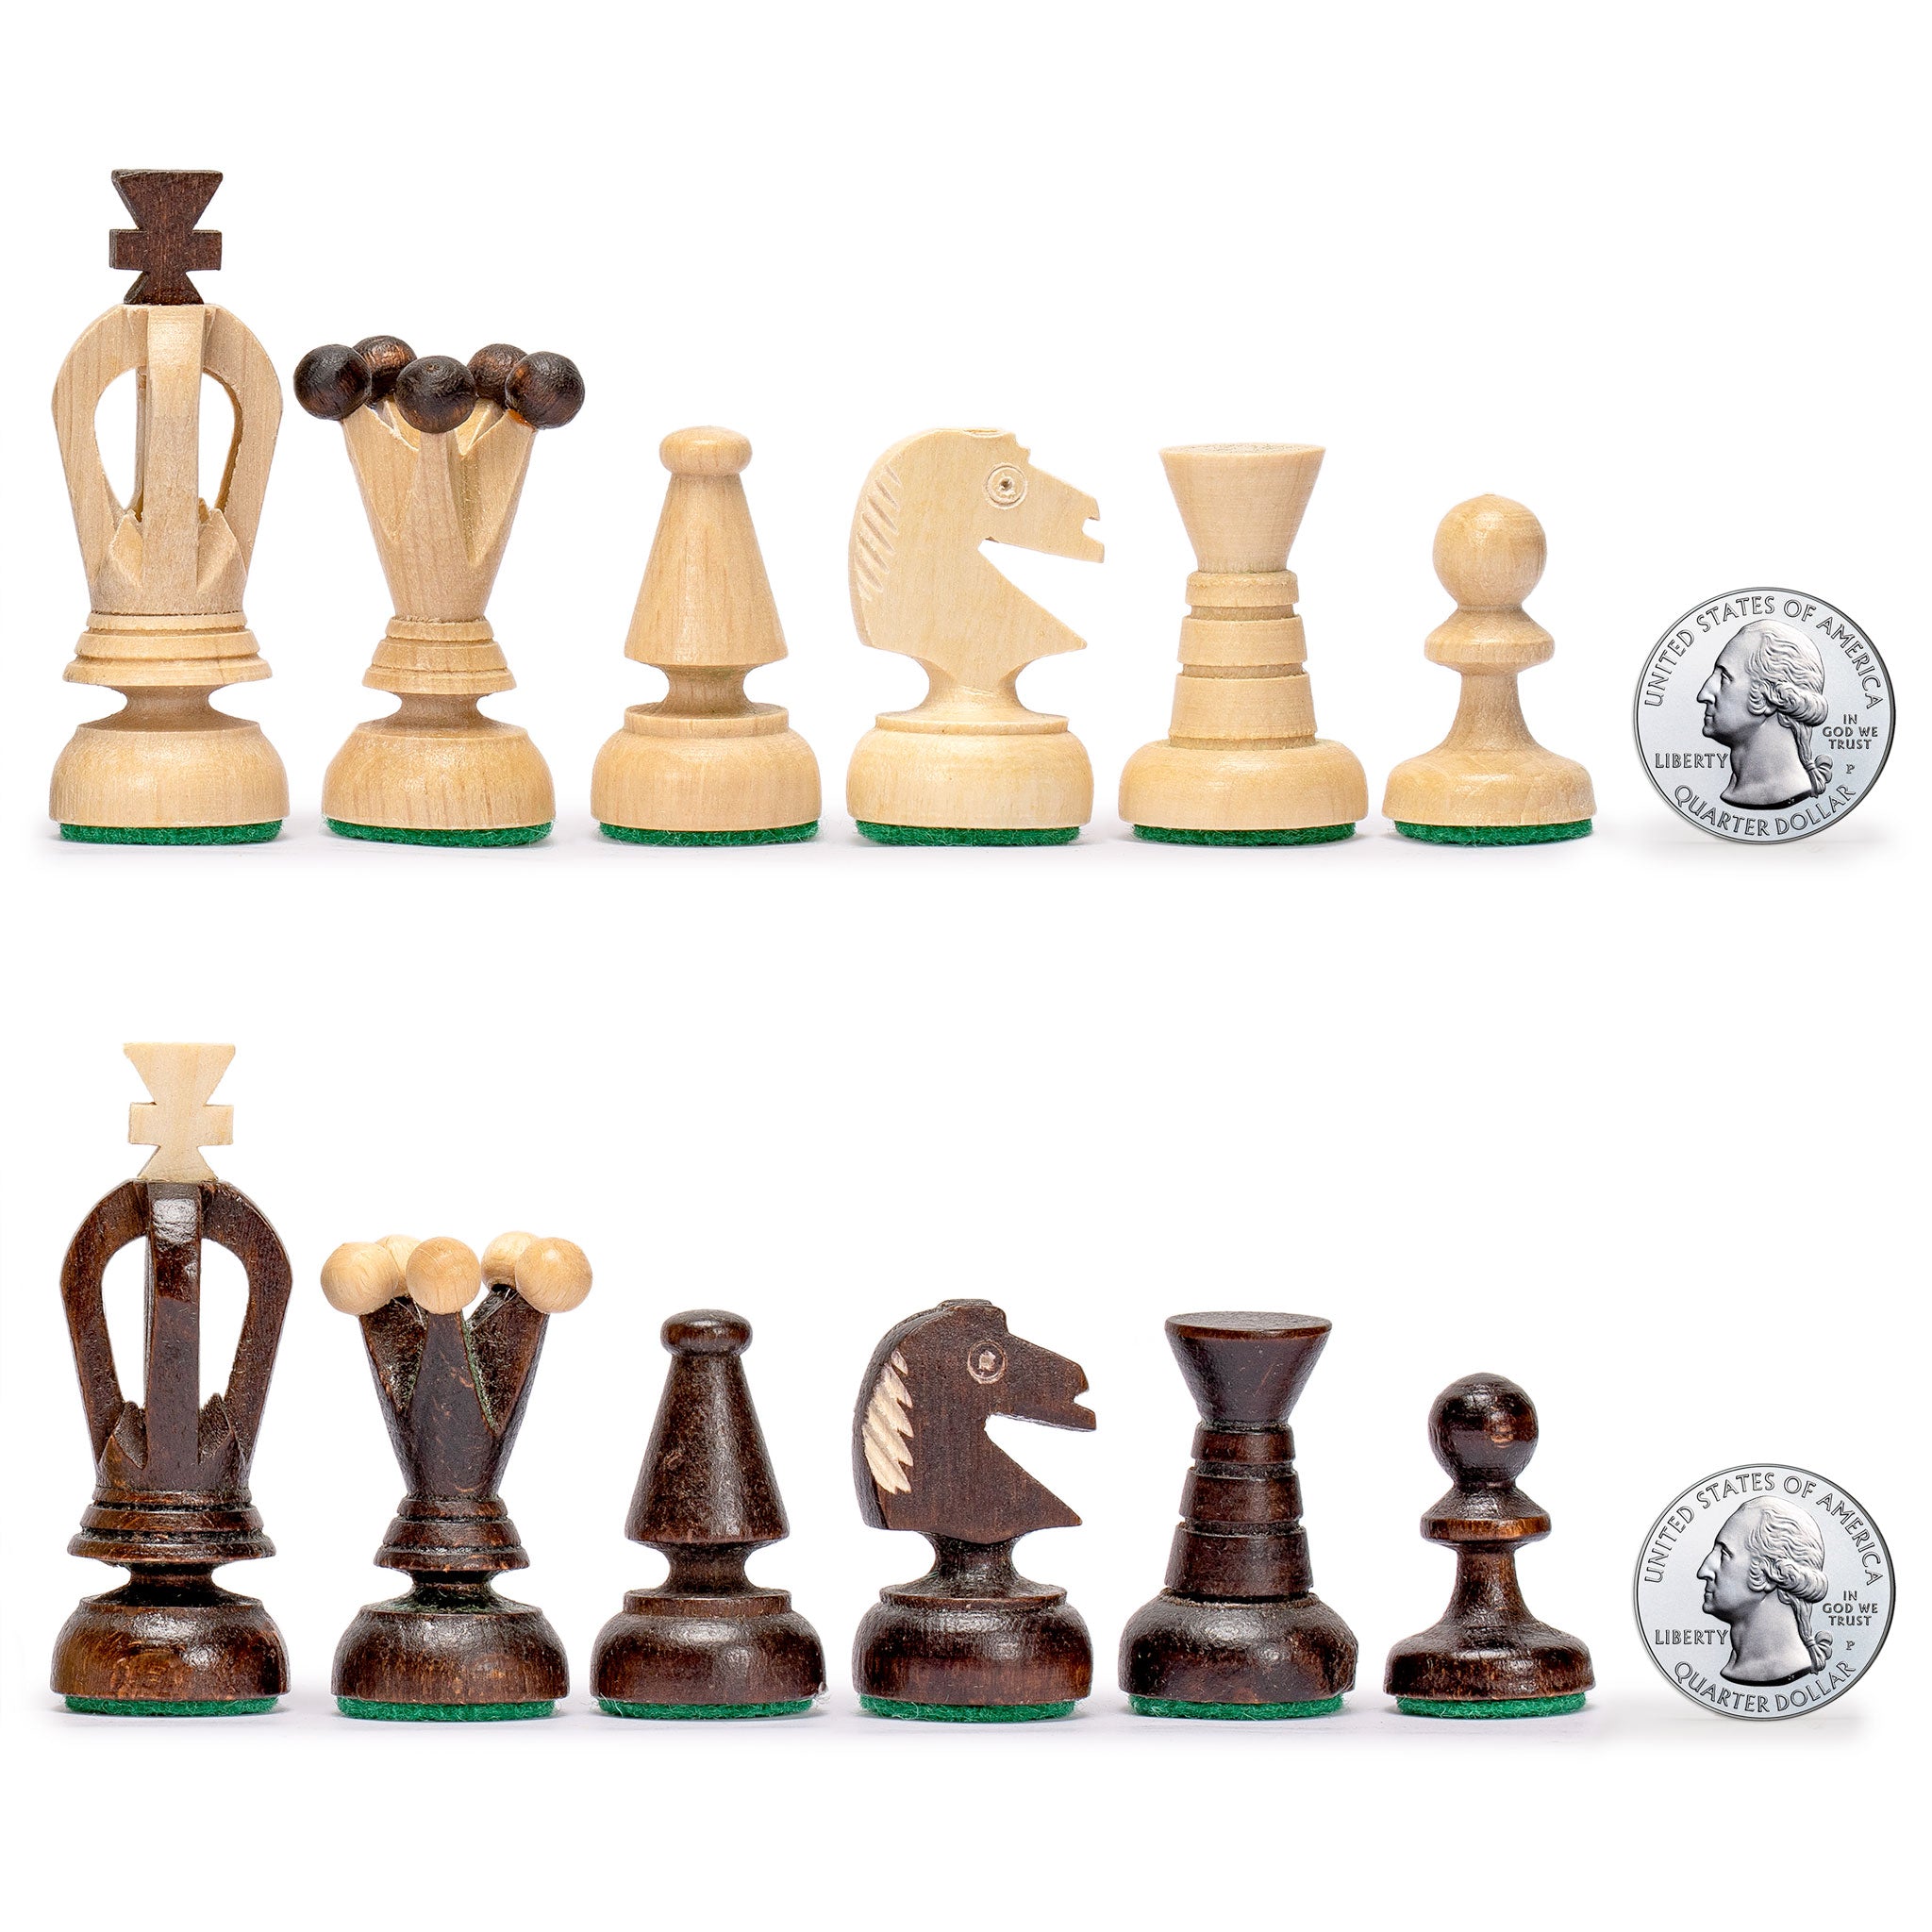 Husaria European International Chess Wooden Game Set, "King's Classic" - 11.3" Small Size Chess Set-Husaria